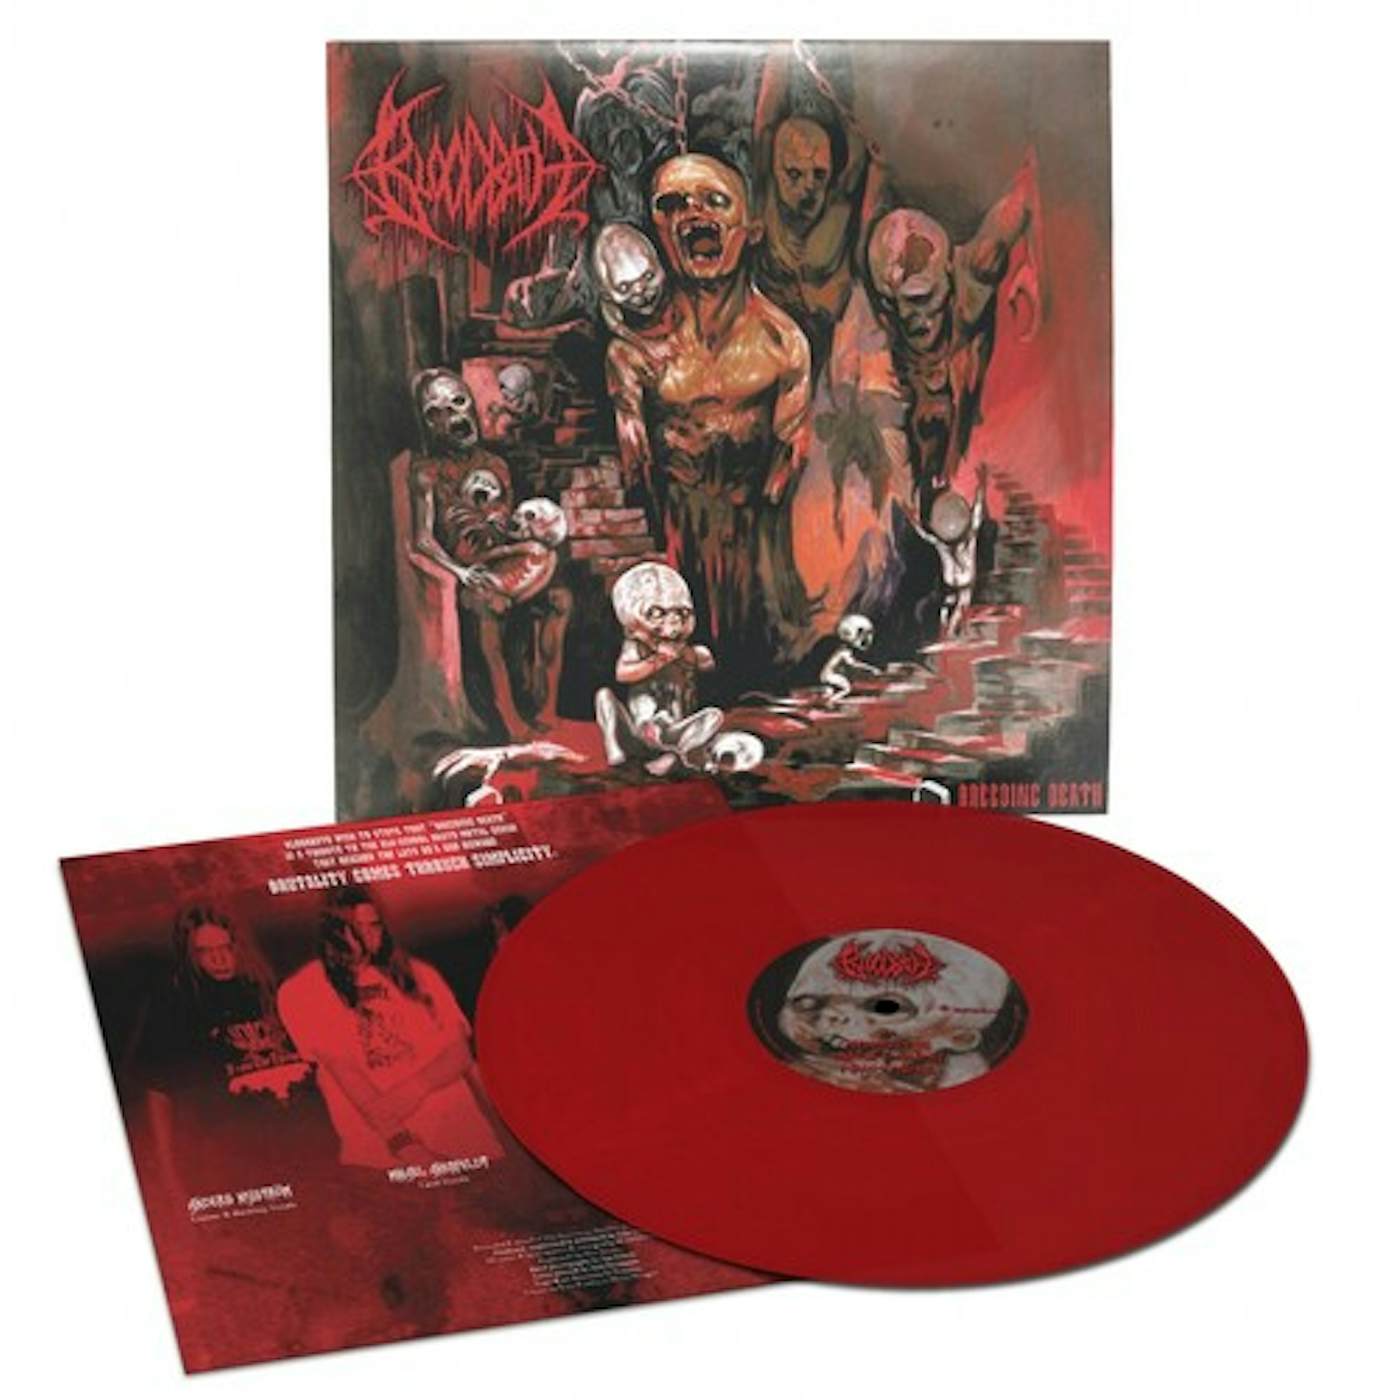 Bloodbath BREEDING DEATH Vinyl Record